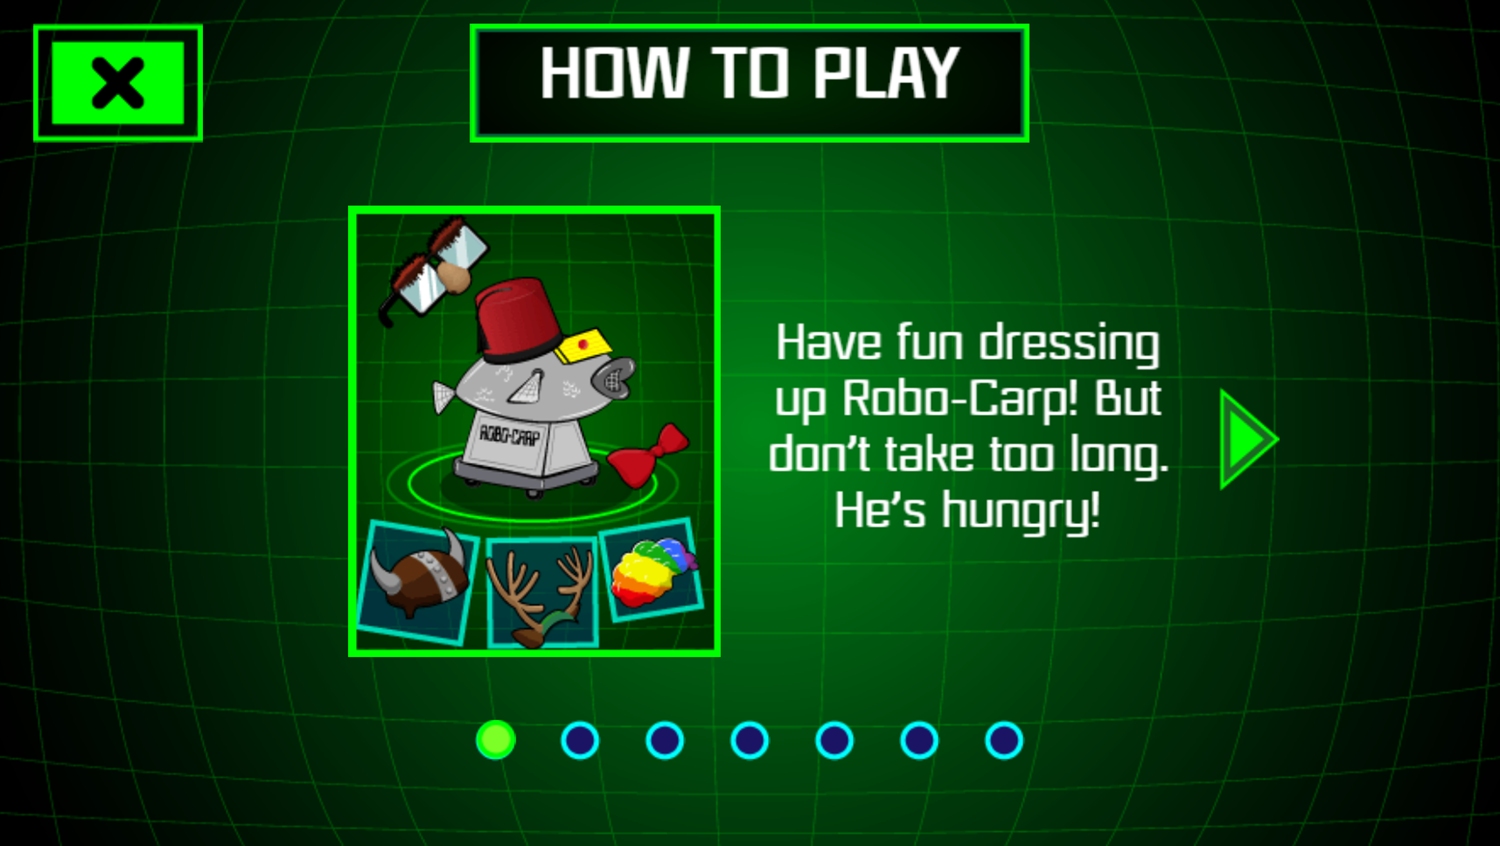 Robo-Carpe Diem Game Goal Screenshot.